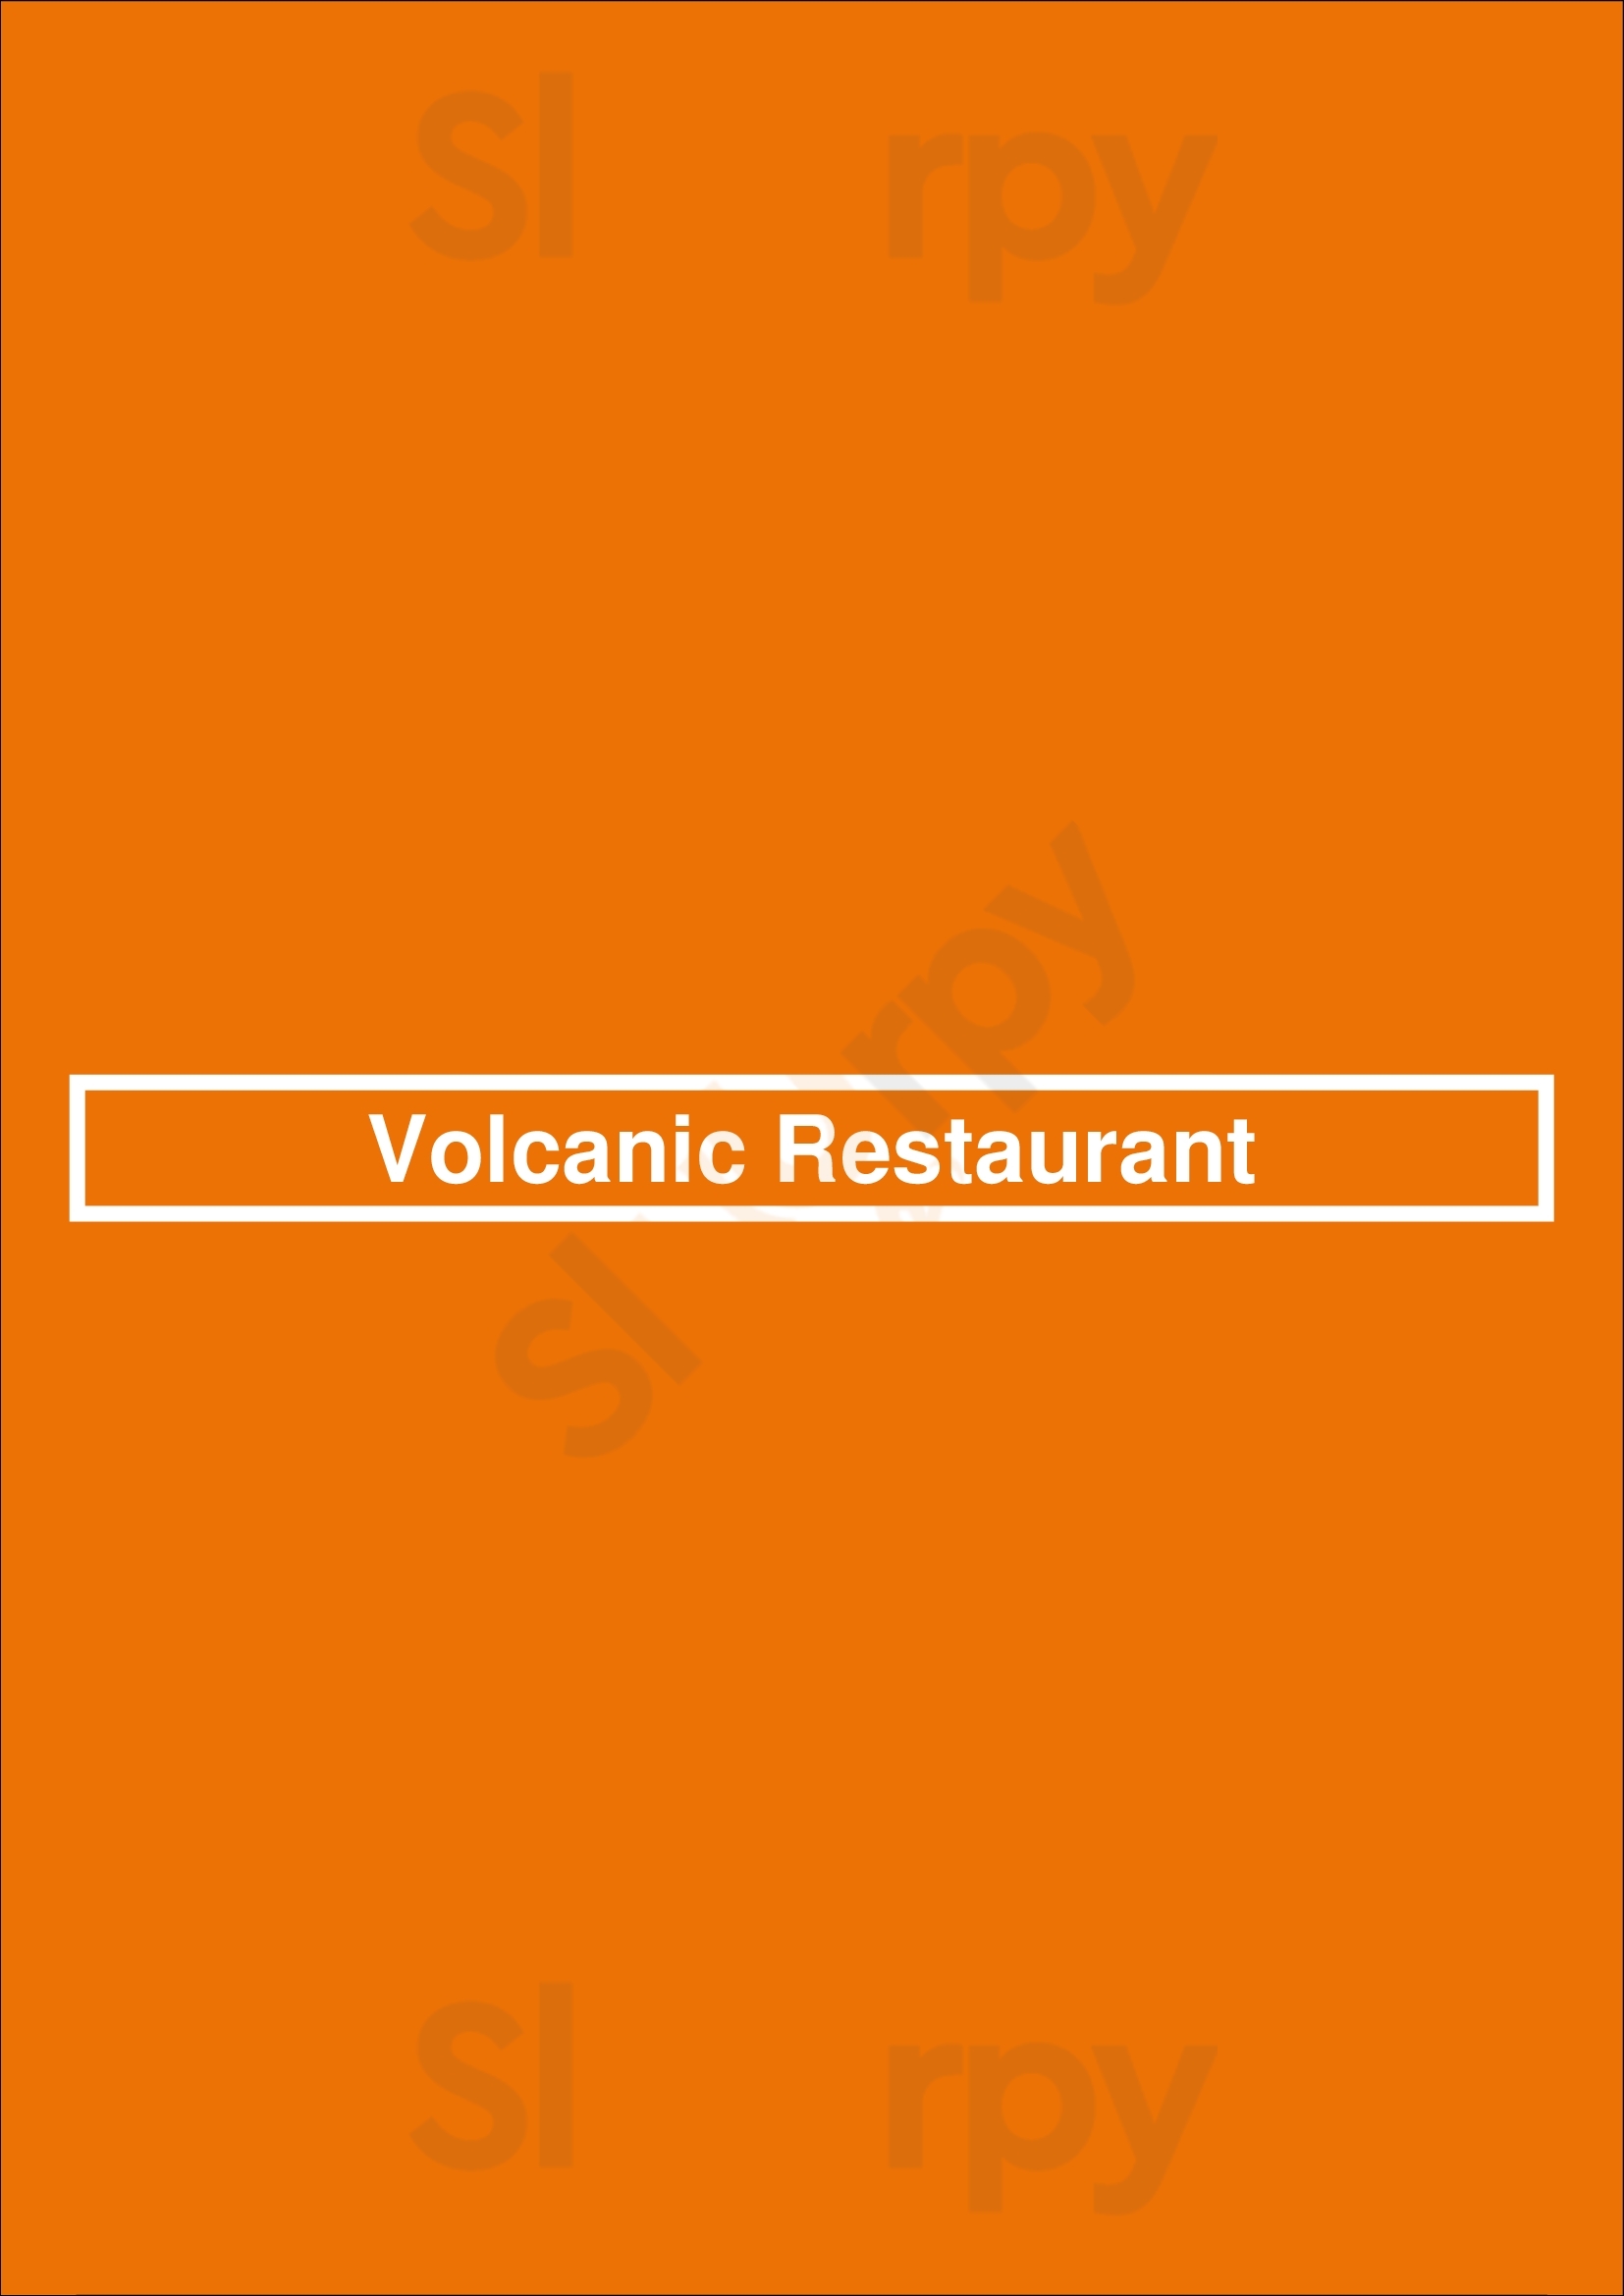 Volcanic Restaurant Badalona Menu - 1